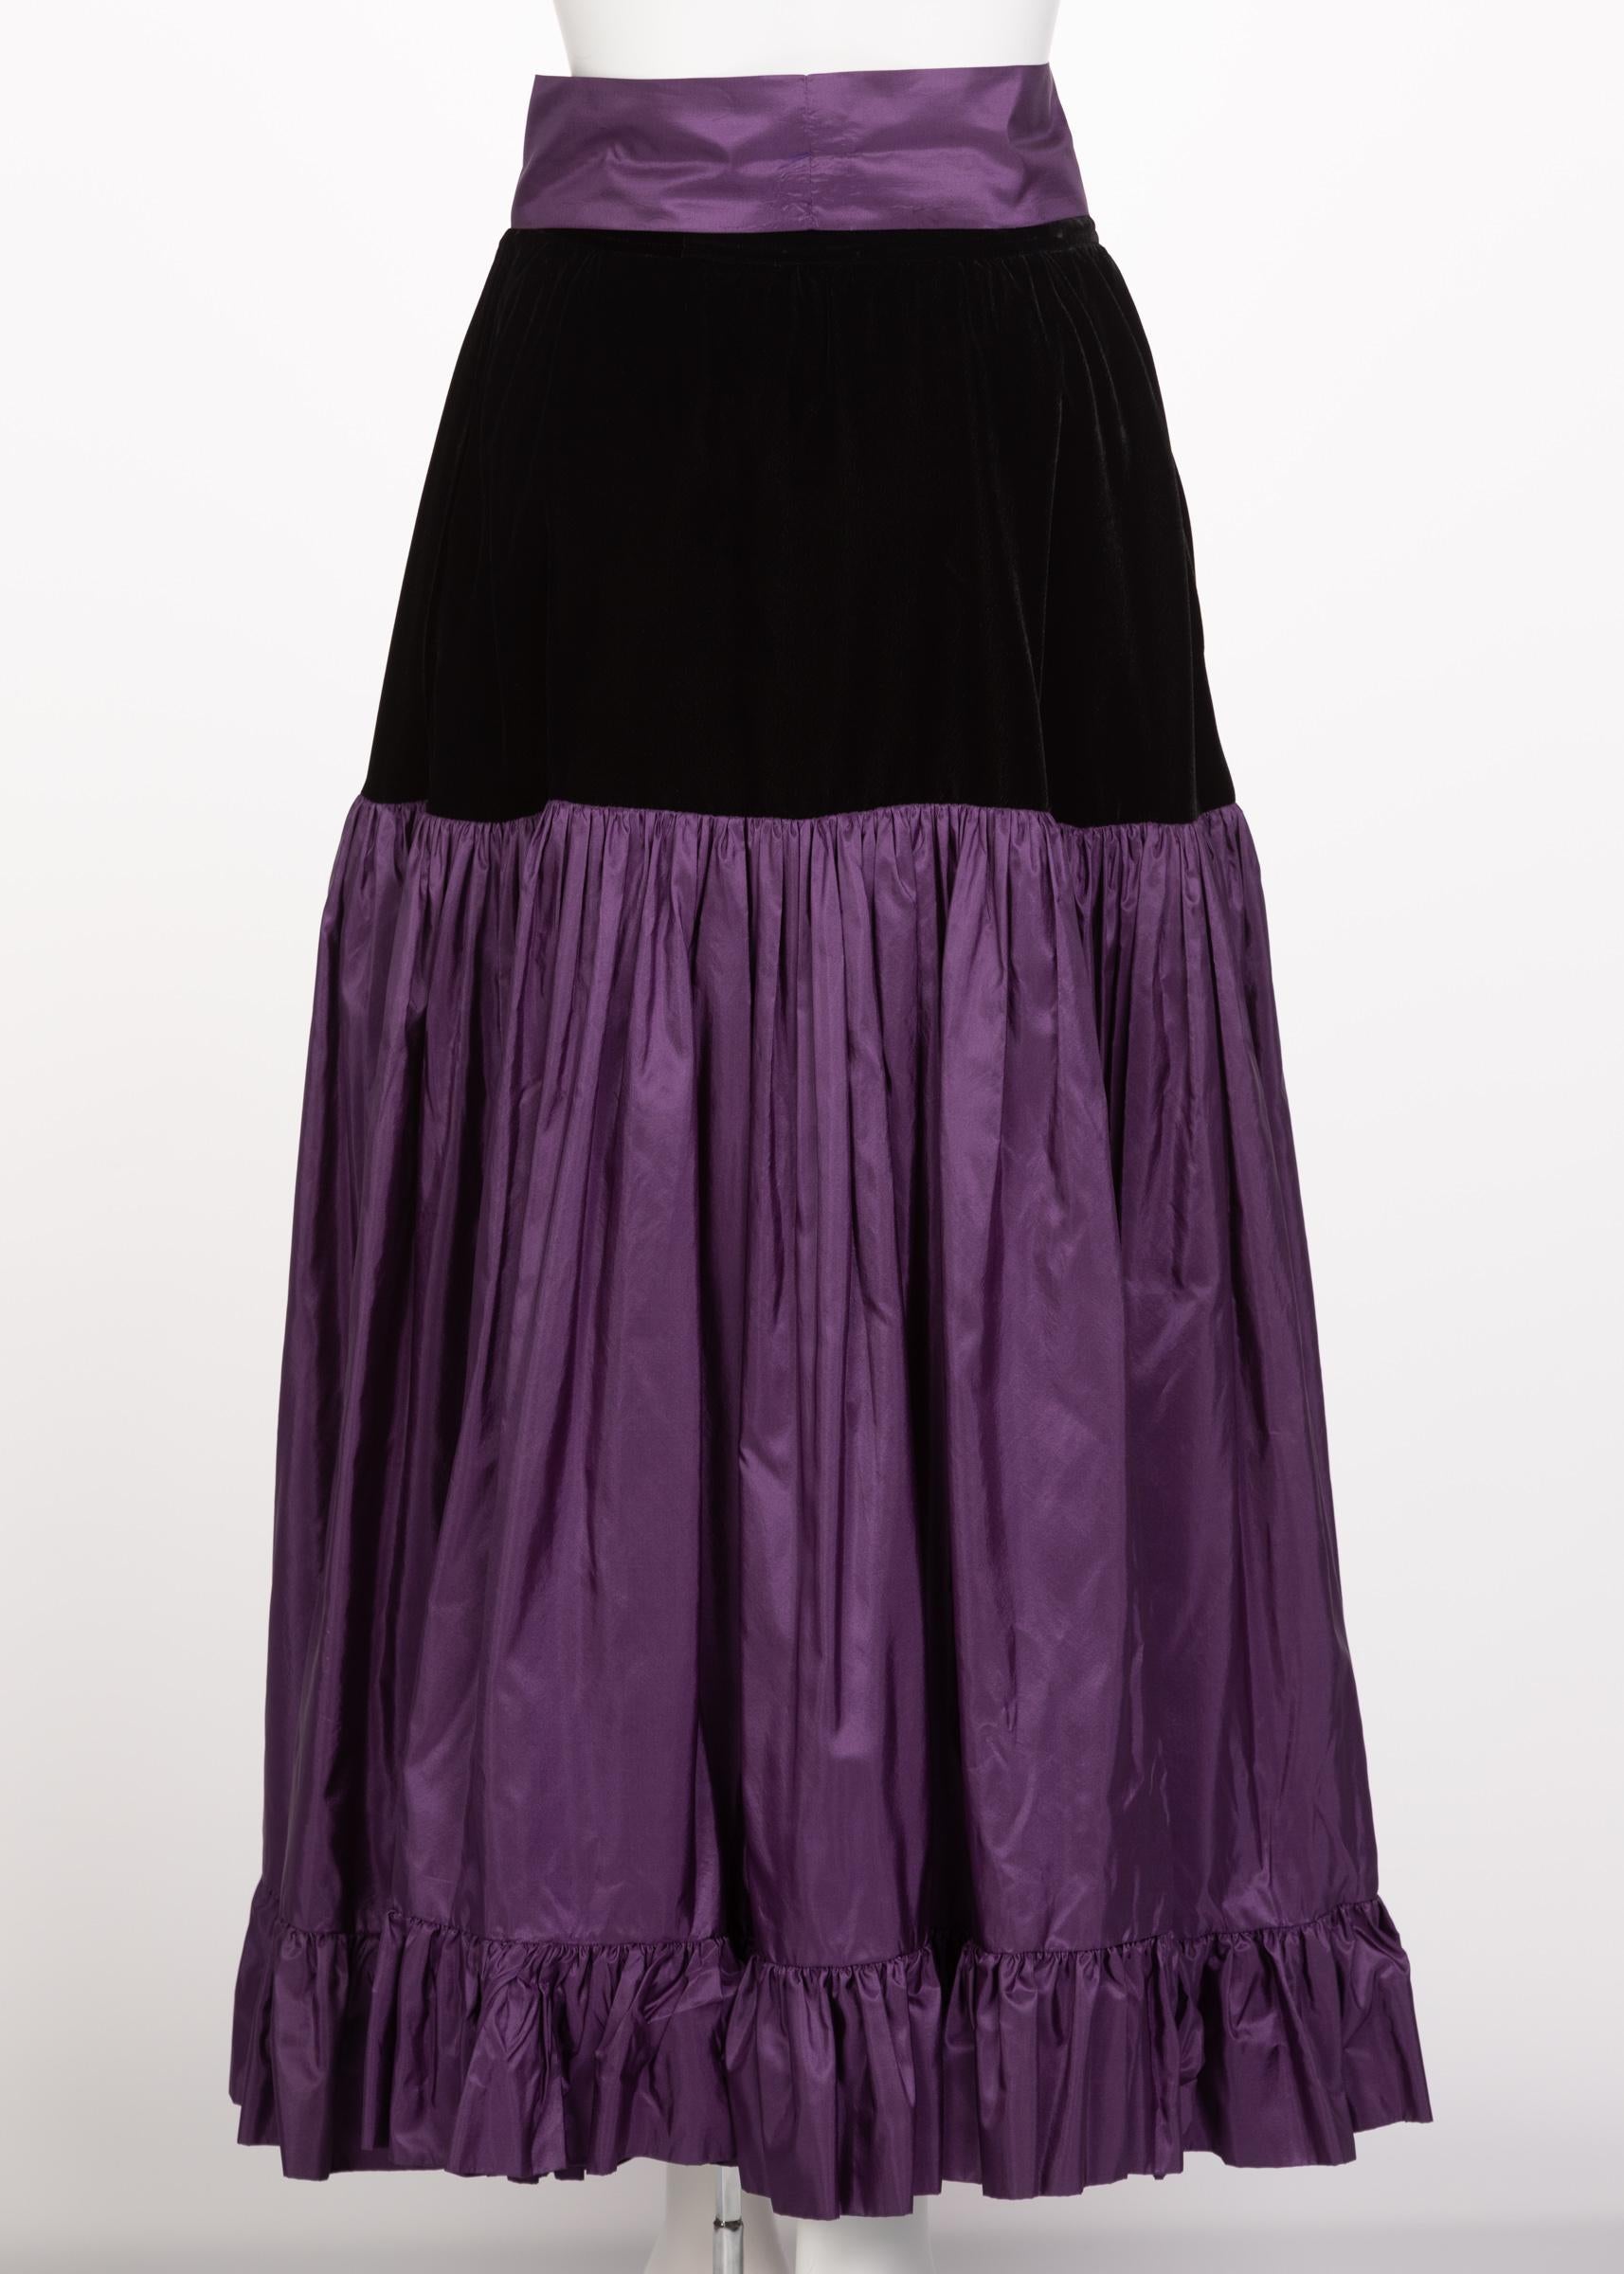 Yves Saint Laurent Skirt Russian Collection Purple Skirt YSL, 1970s For Sale 1